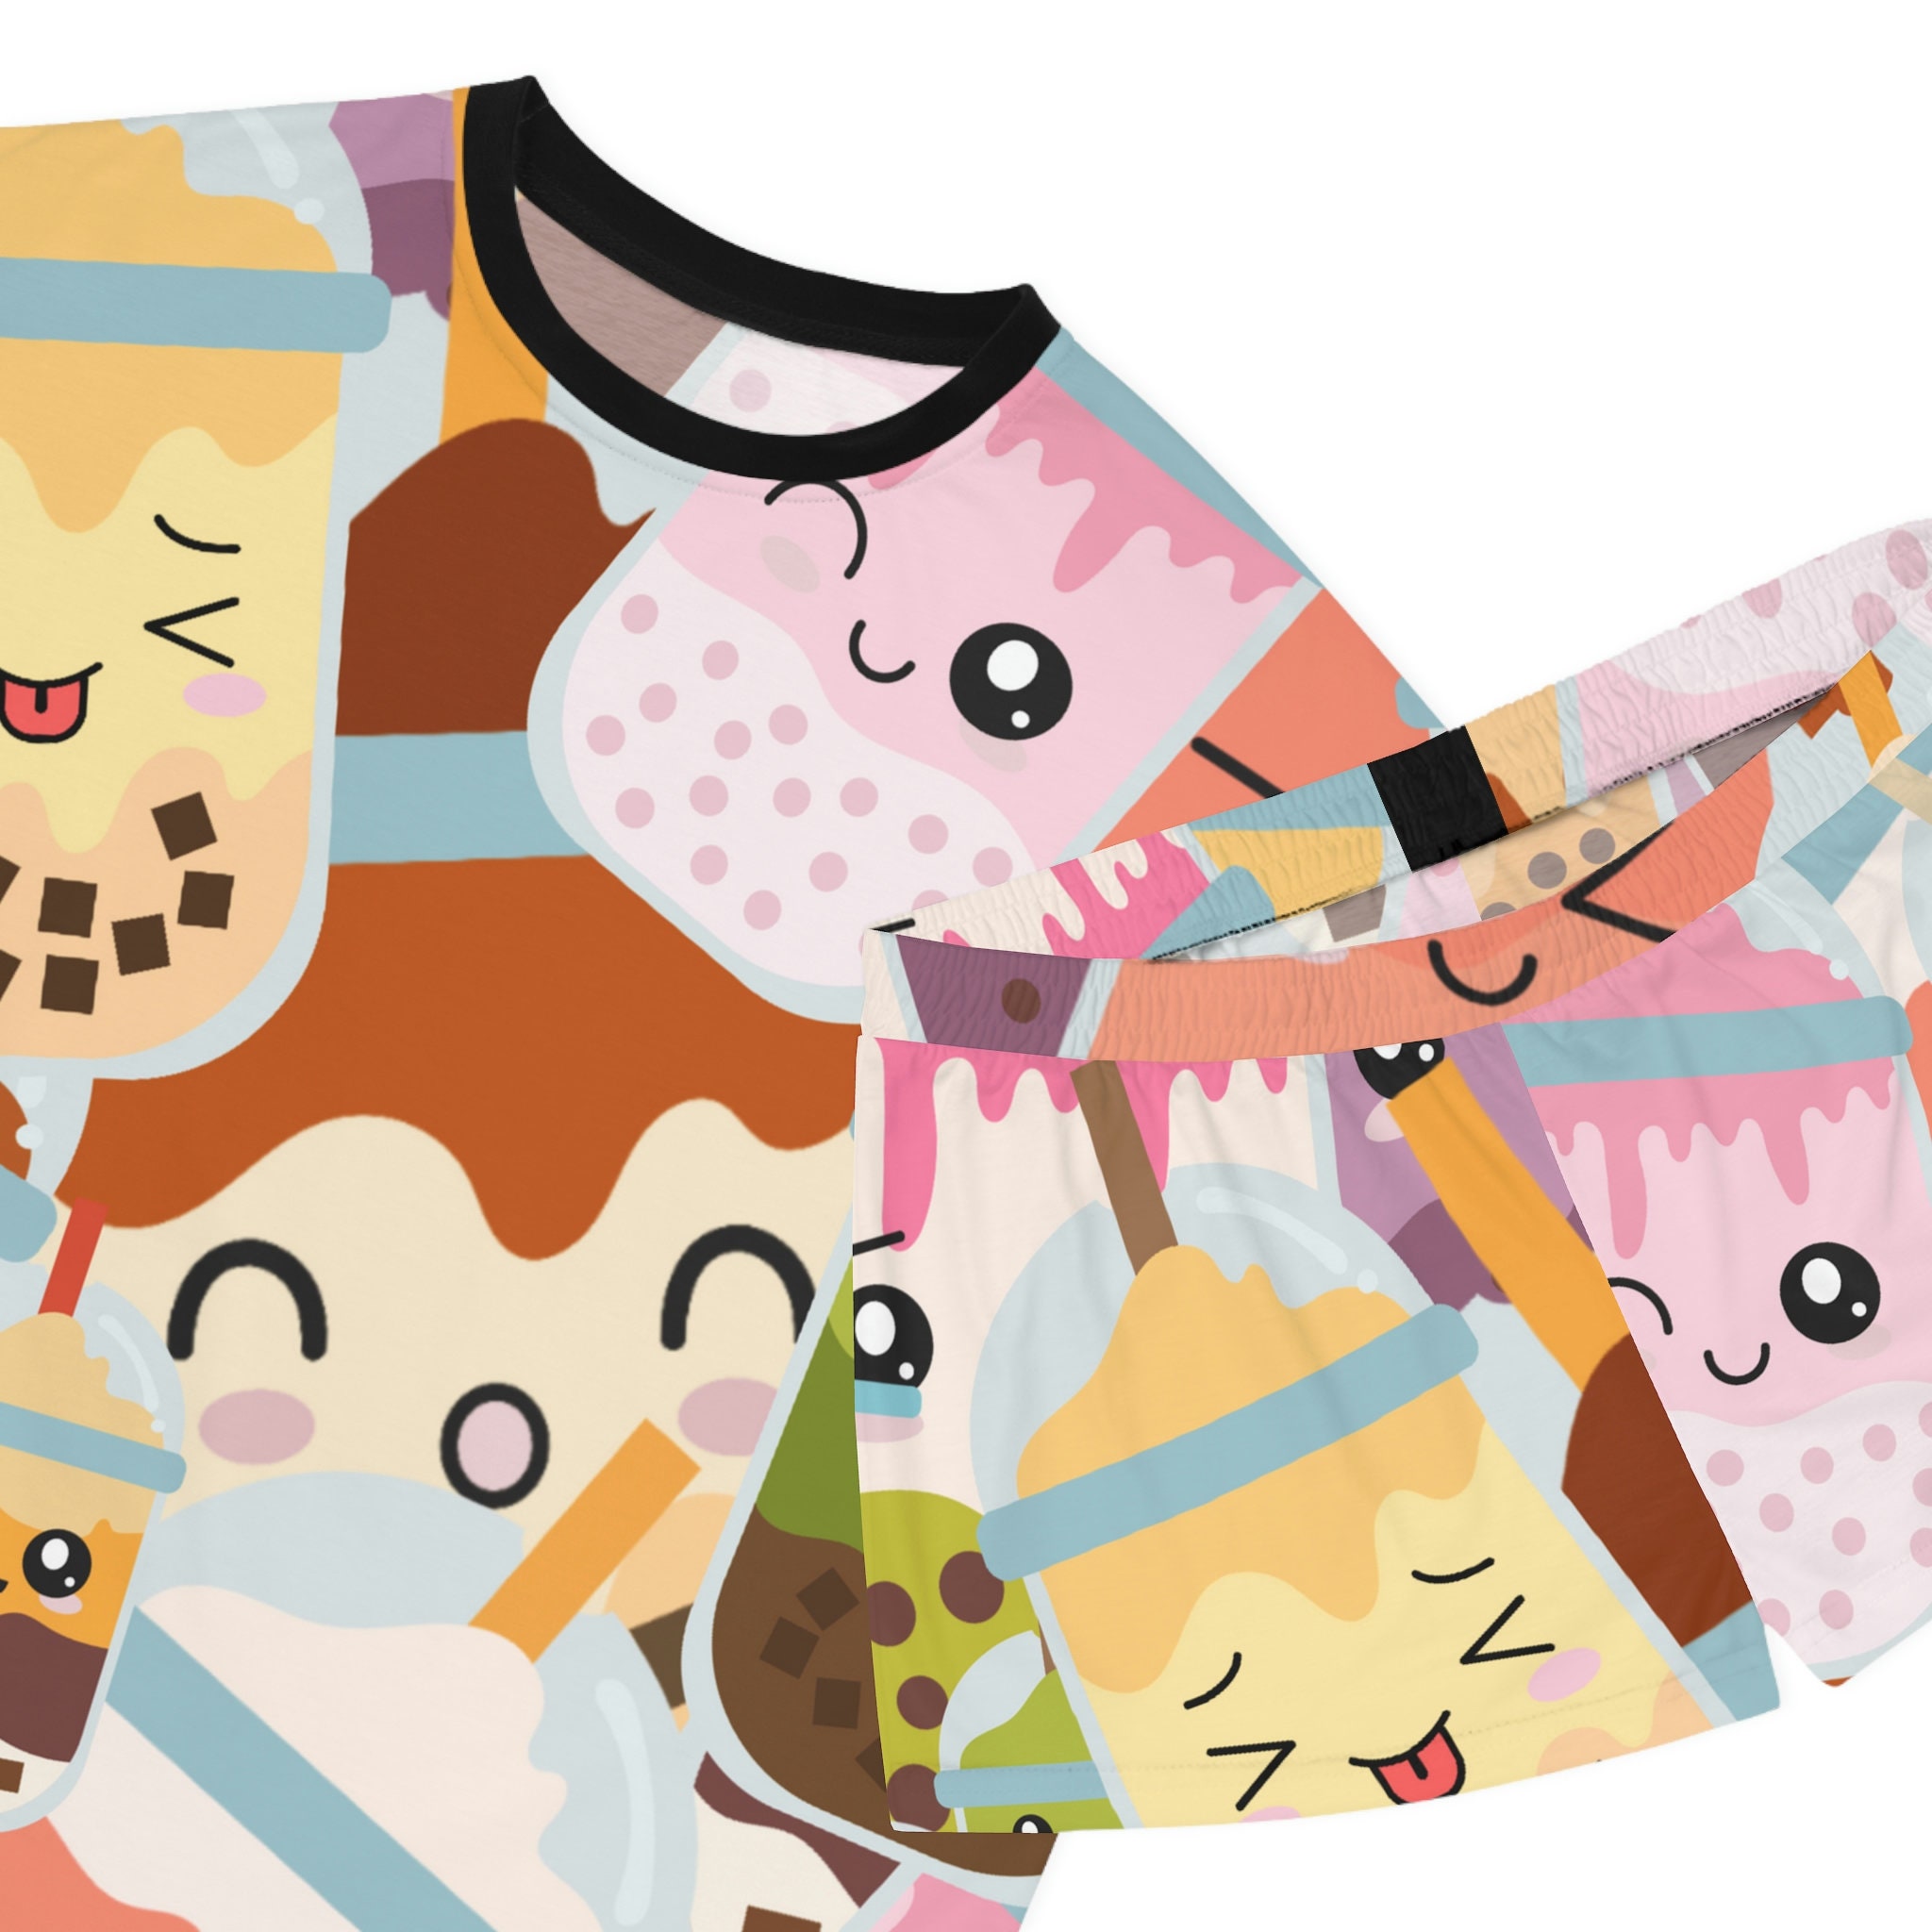 Kawaii Bubble Tea Pajamas Set, Women Sleepwear